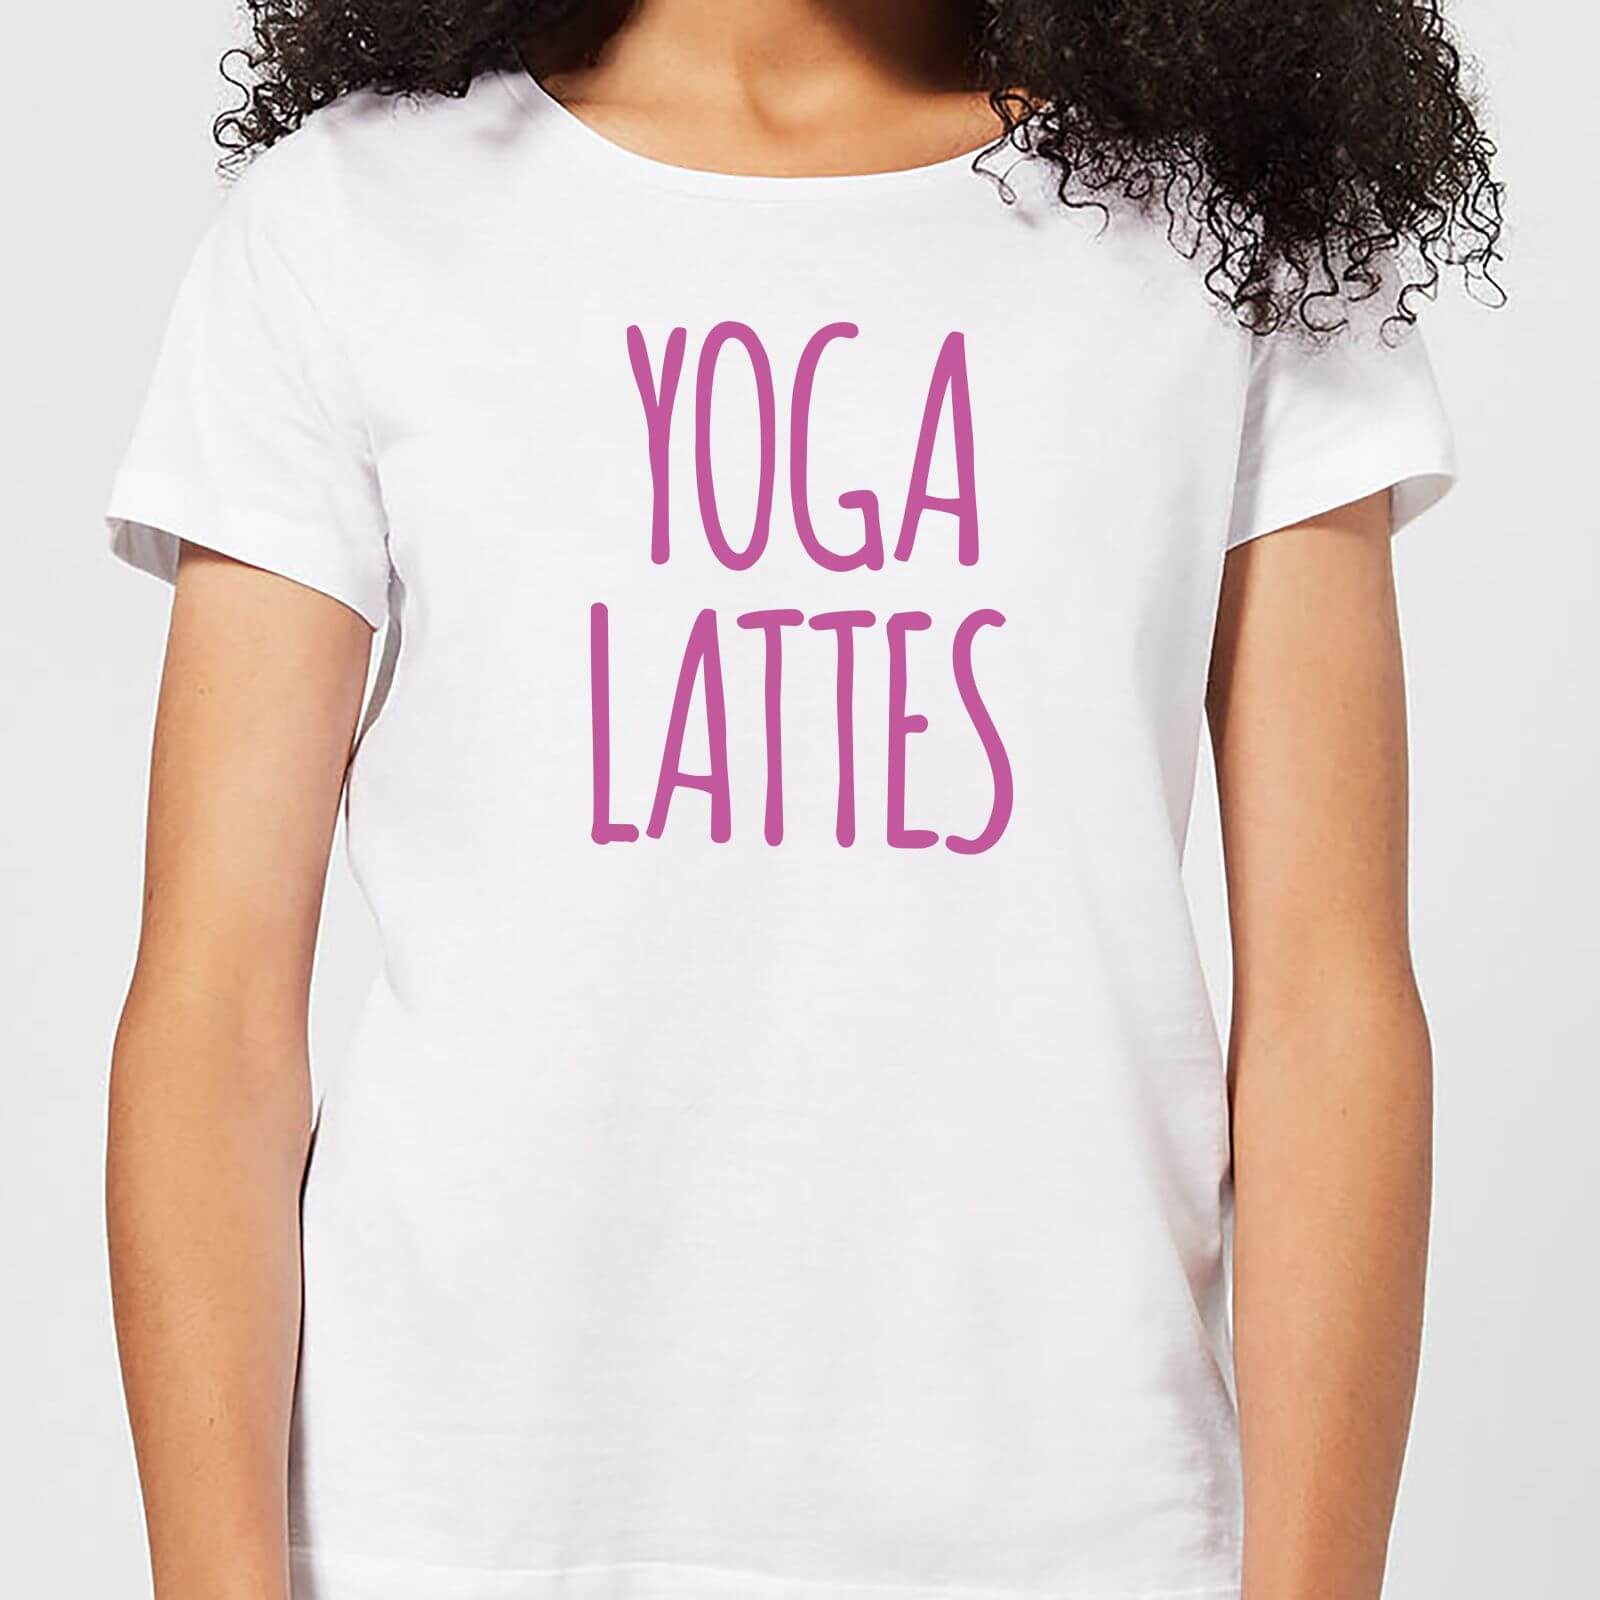 Fitness and Loungewear Yoga Lattes Women's T-Shirt - White - 4XL - White